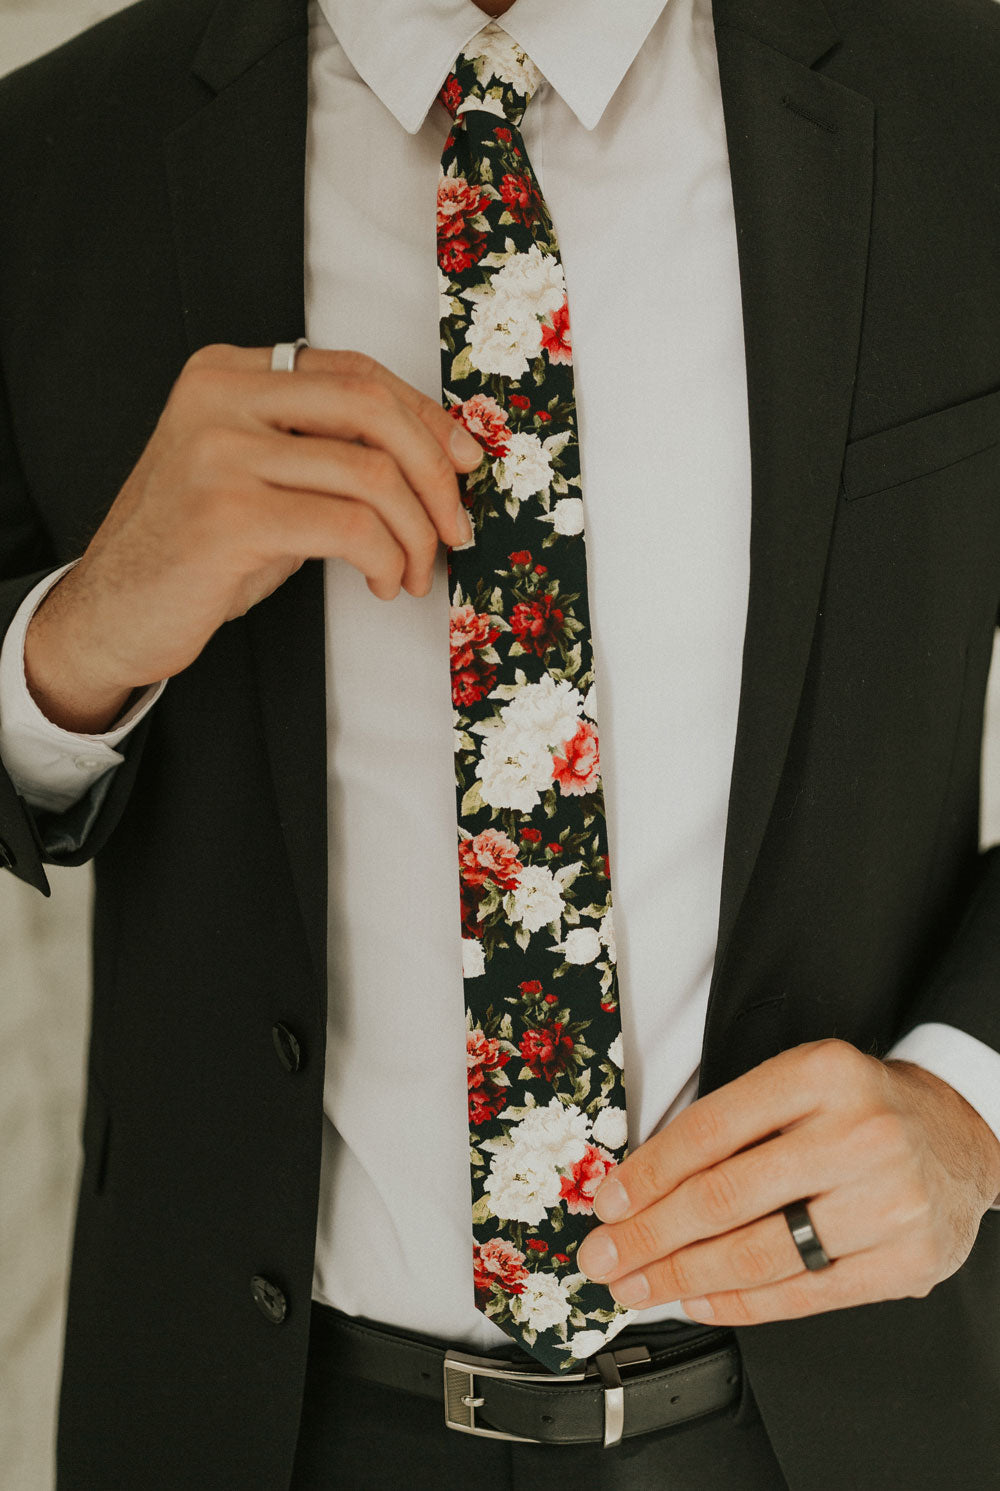 Crimson Rose tie worn with a white shirt, black suit jacket, black belt and black pants.